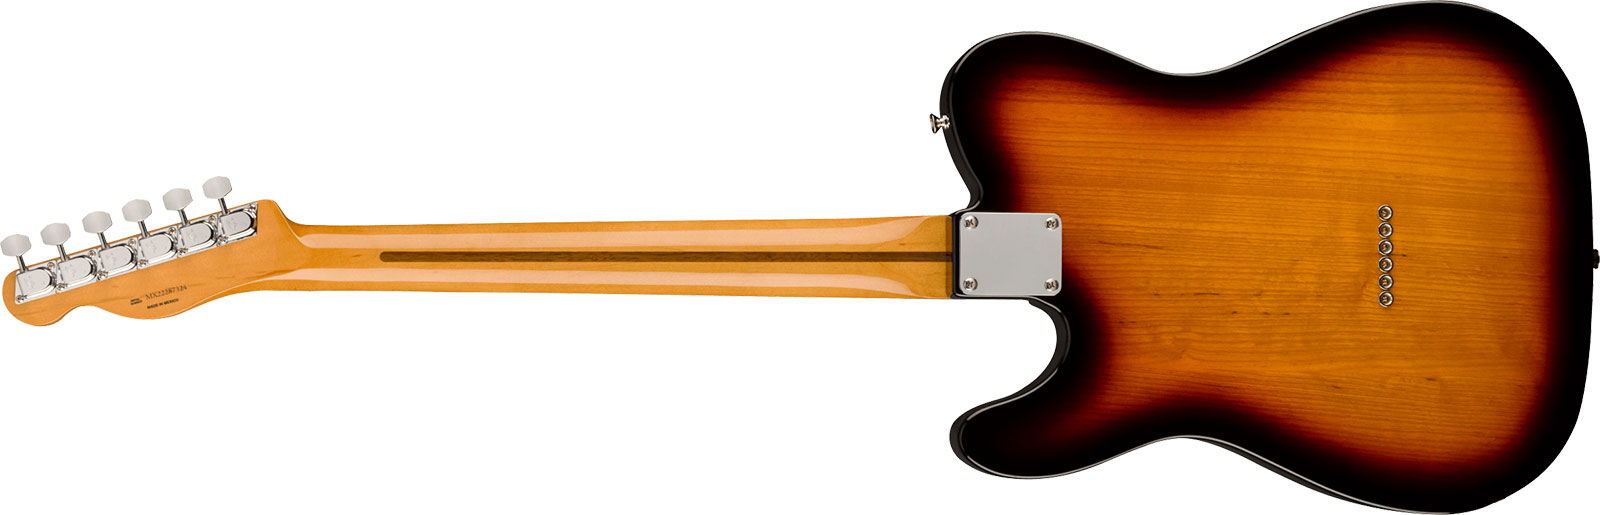 Fender Tele 60s Thinline Vintera 2 Mex 2s Ht Mn - 3-color Sunburst - Semi-hollow electric guitar - Variation 1